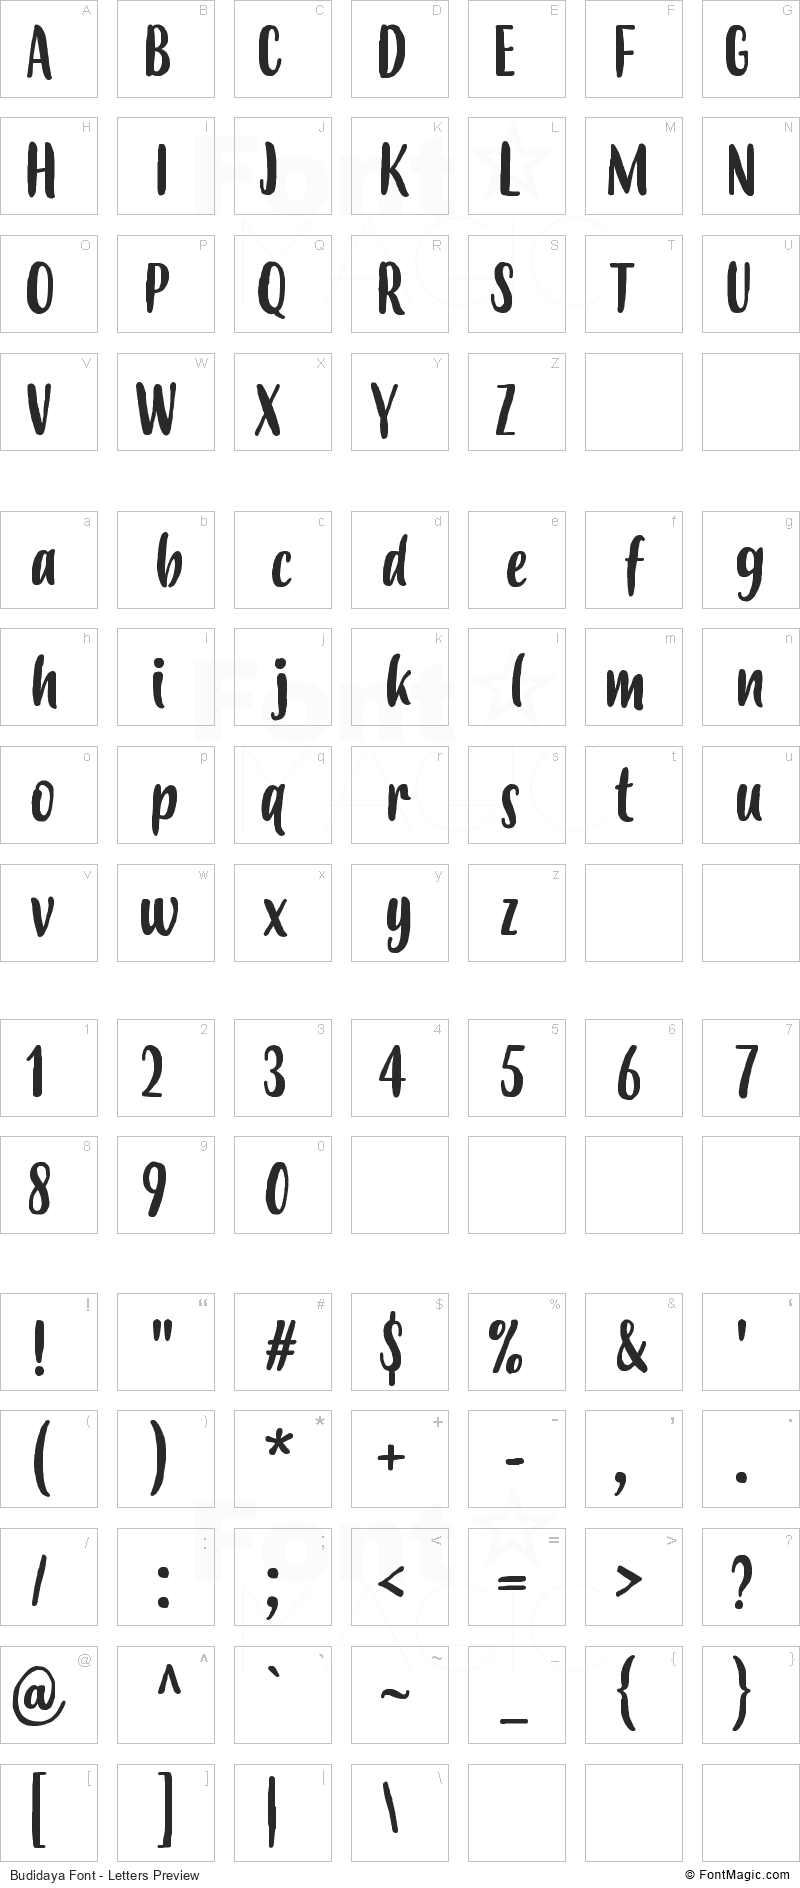 Budidaya Font - All Latters Preview Chart